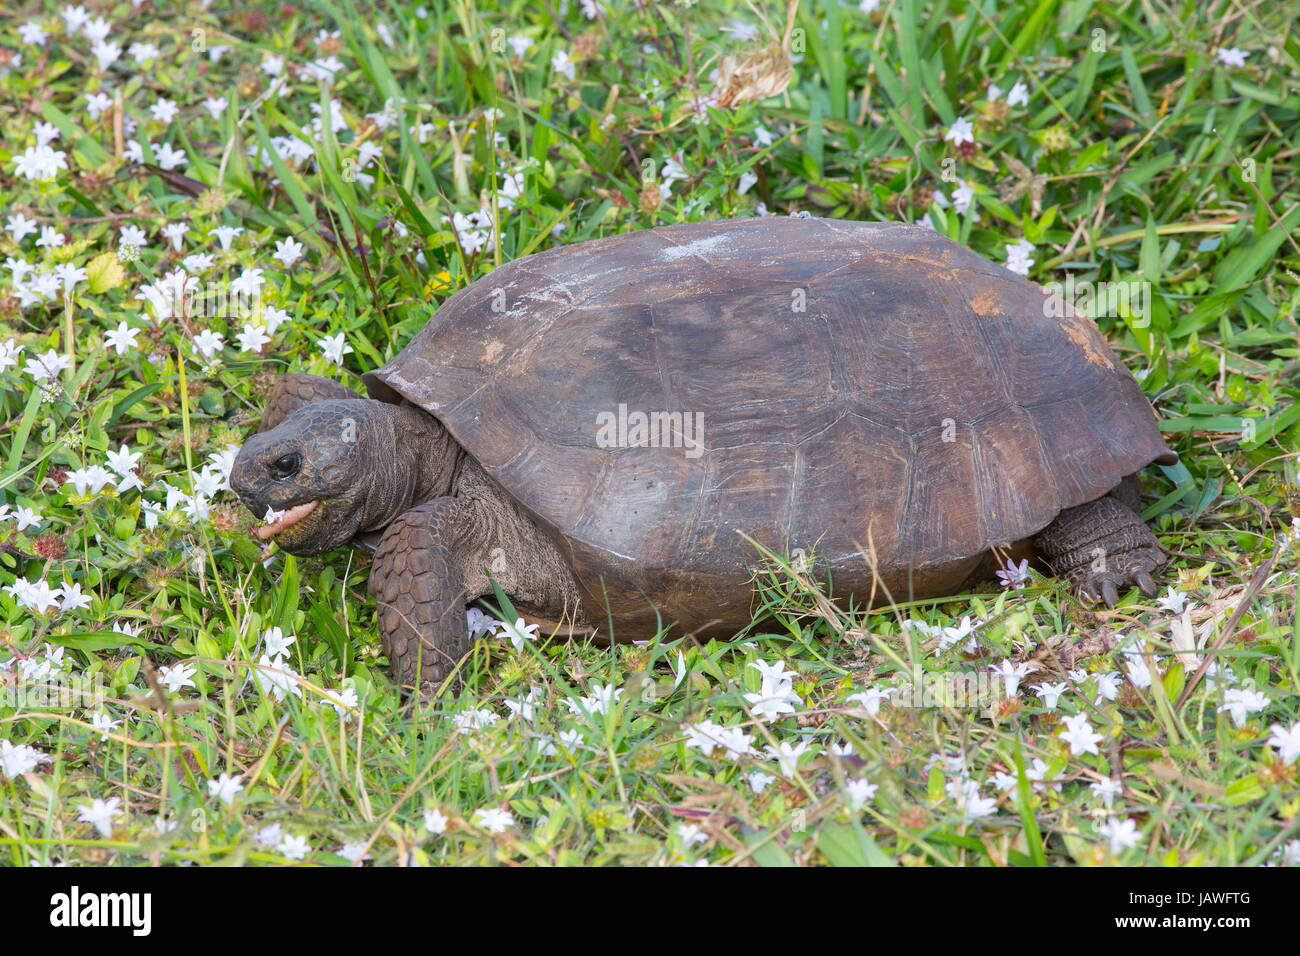 Una tartaruga di gopher, Gopherus polyphemus, appoggiato in erba. Foto Stock